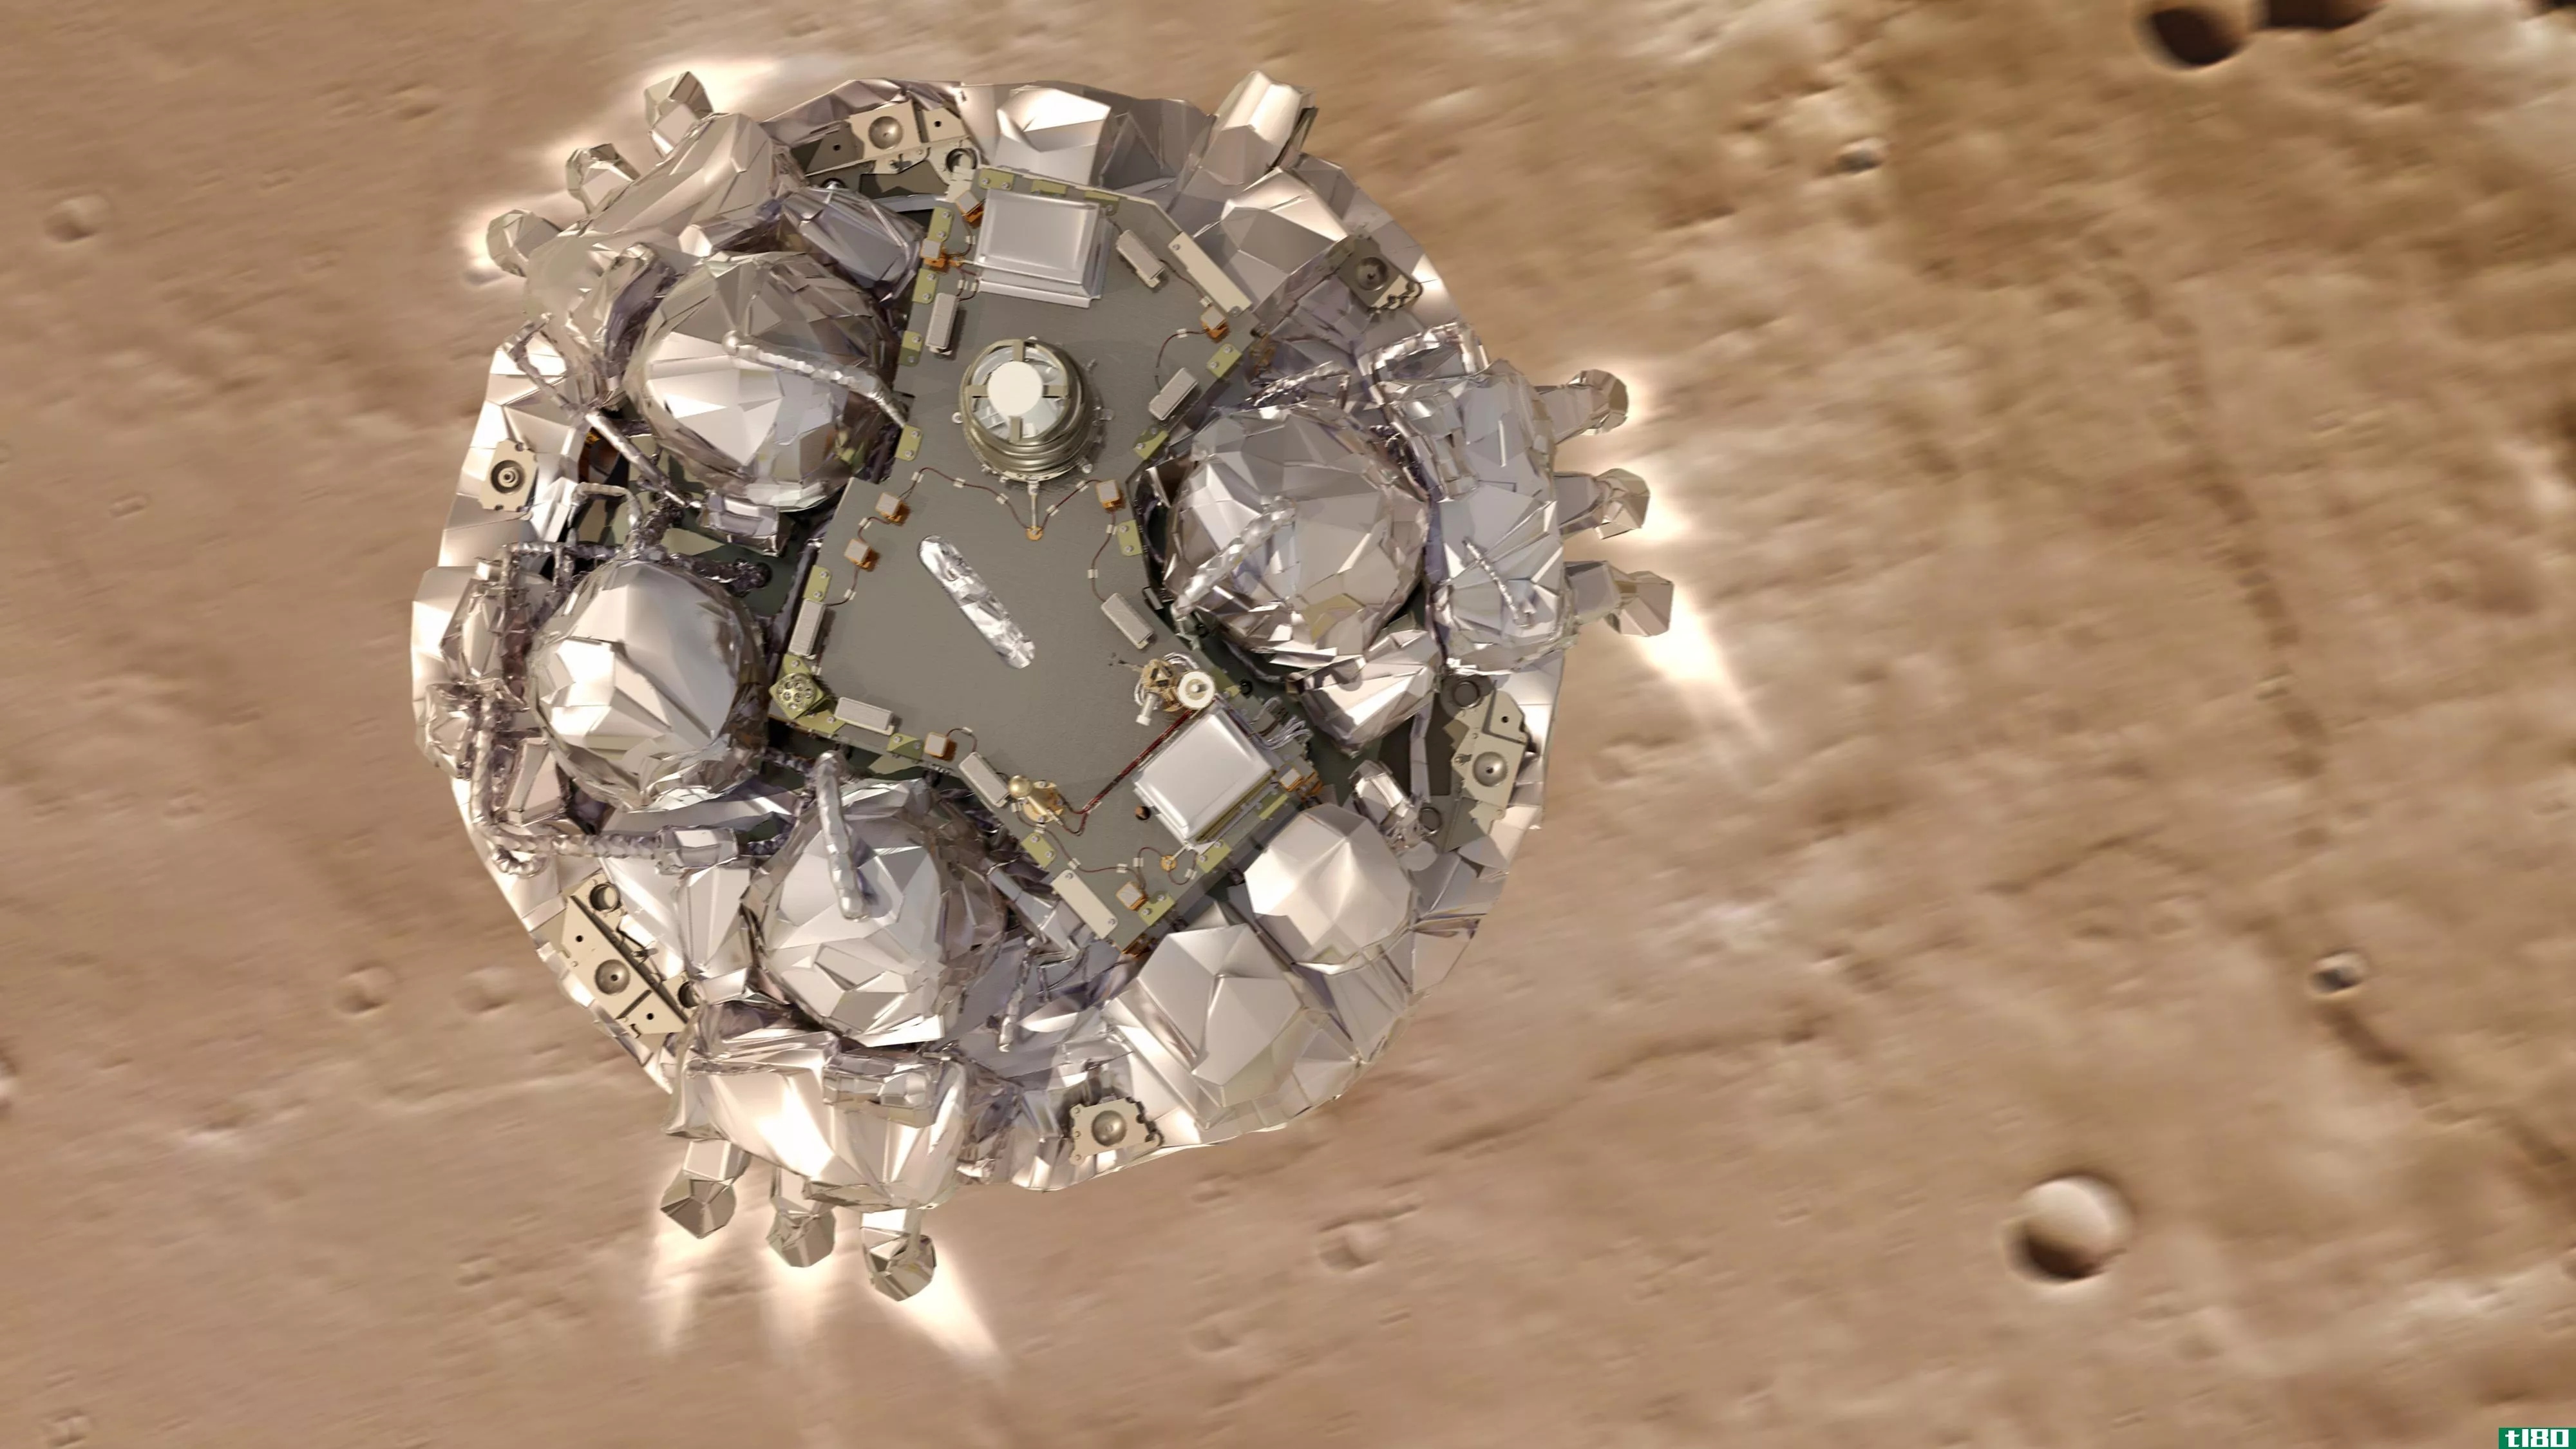 exomars太空船将如何到达火星表面